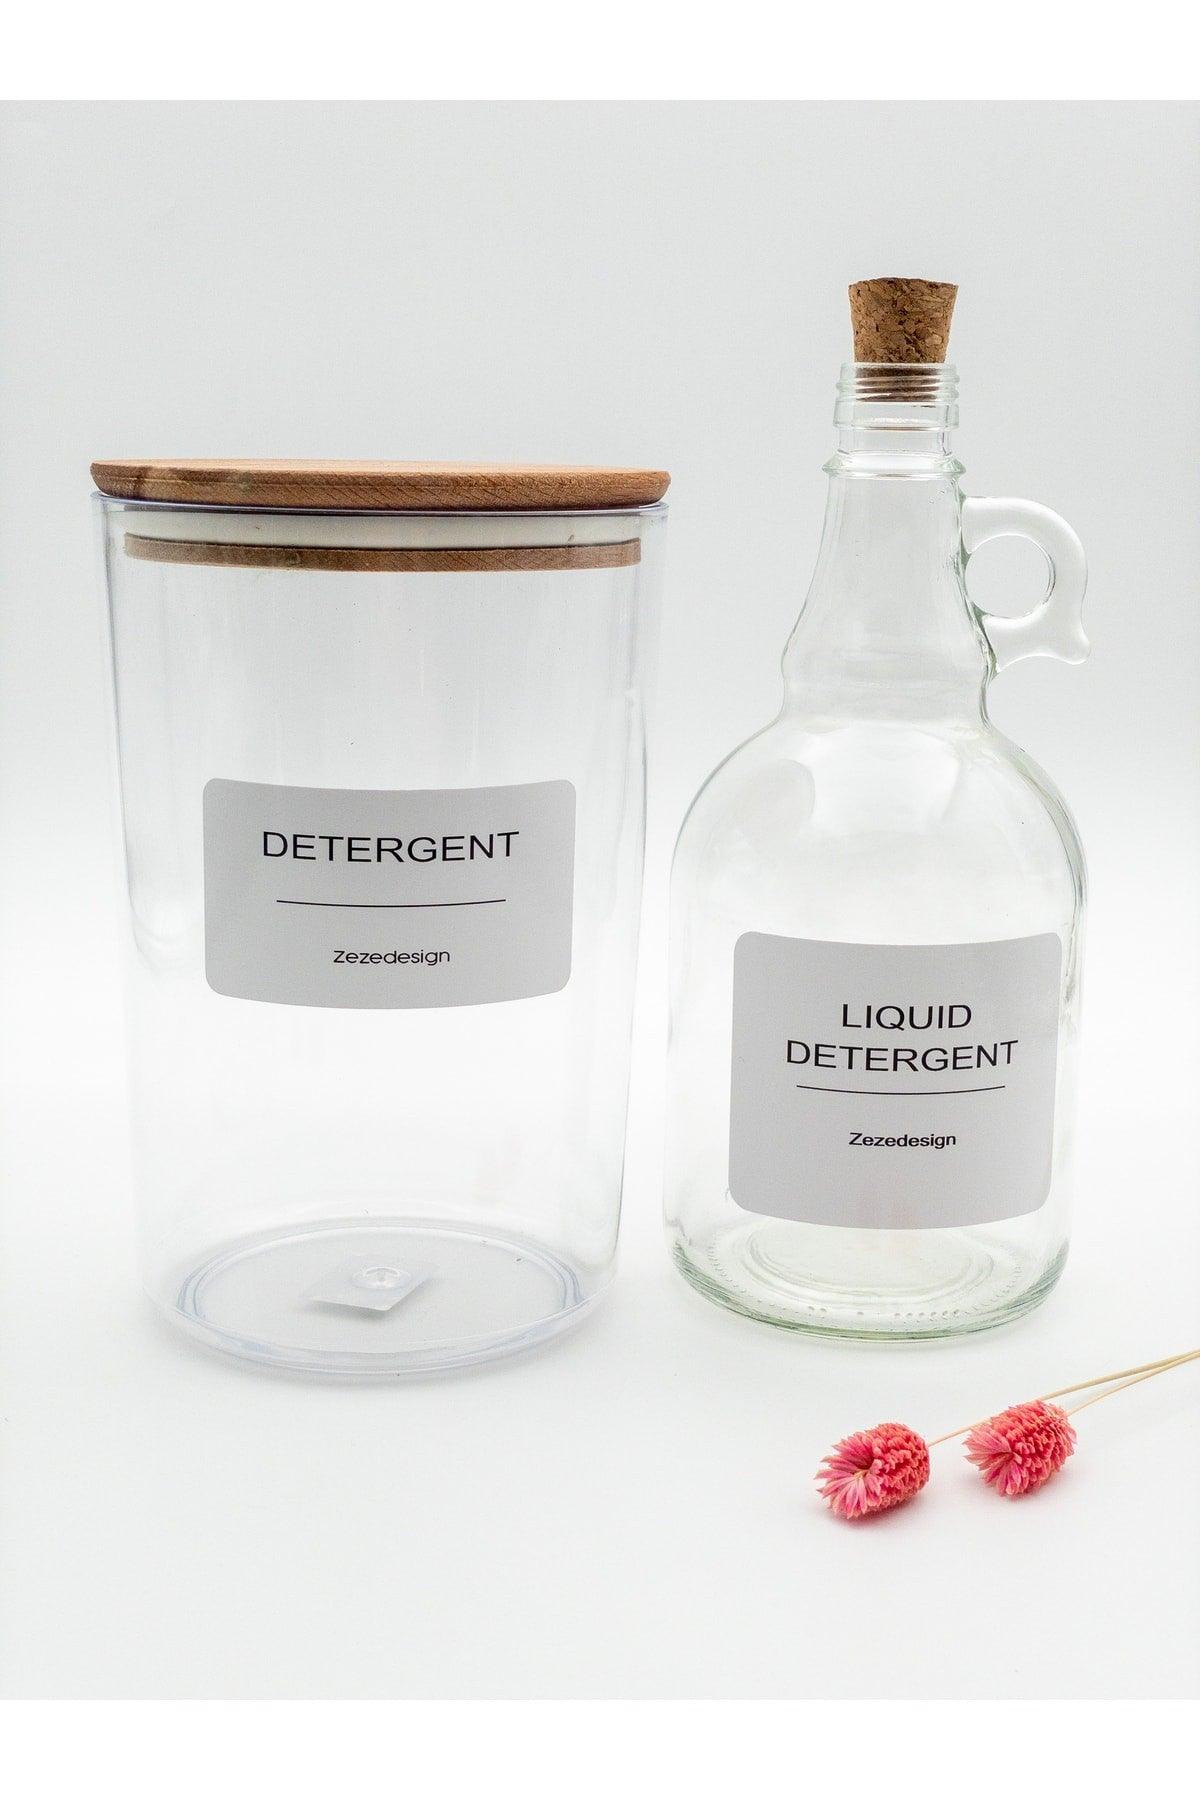 Powder Detergent Jar / Box With Wooden Lid 2300ml And Liquid Detergent Bottle With Cork Cap 1000ml - Swordslife